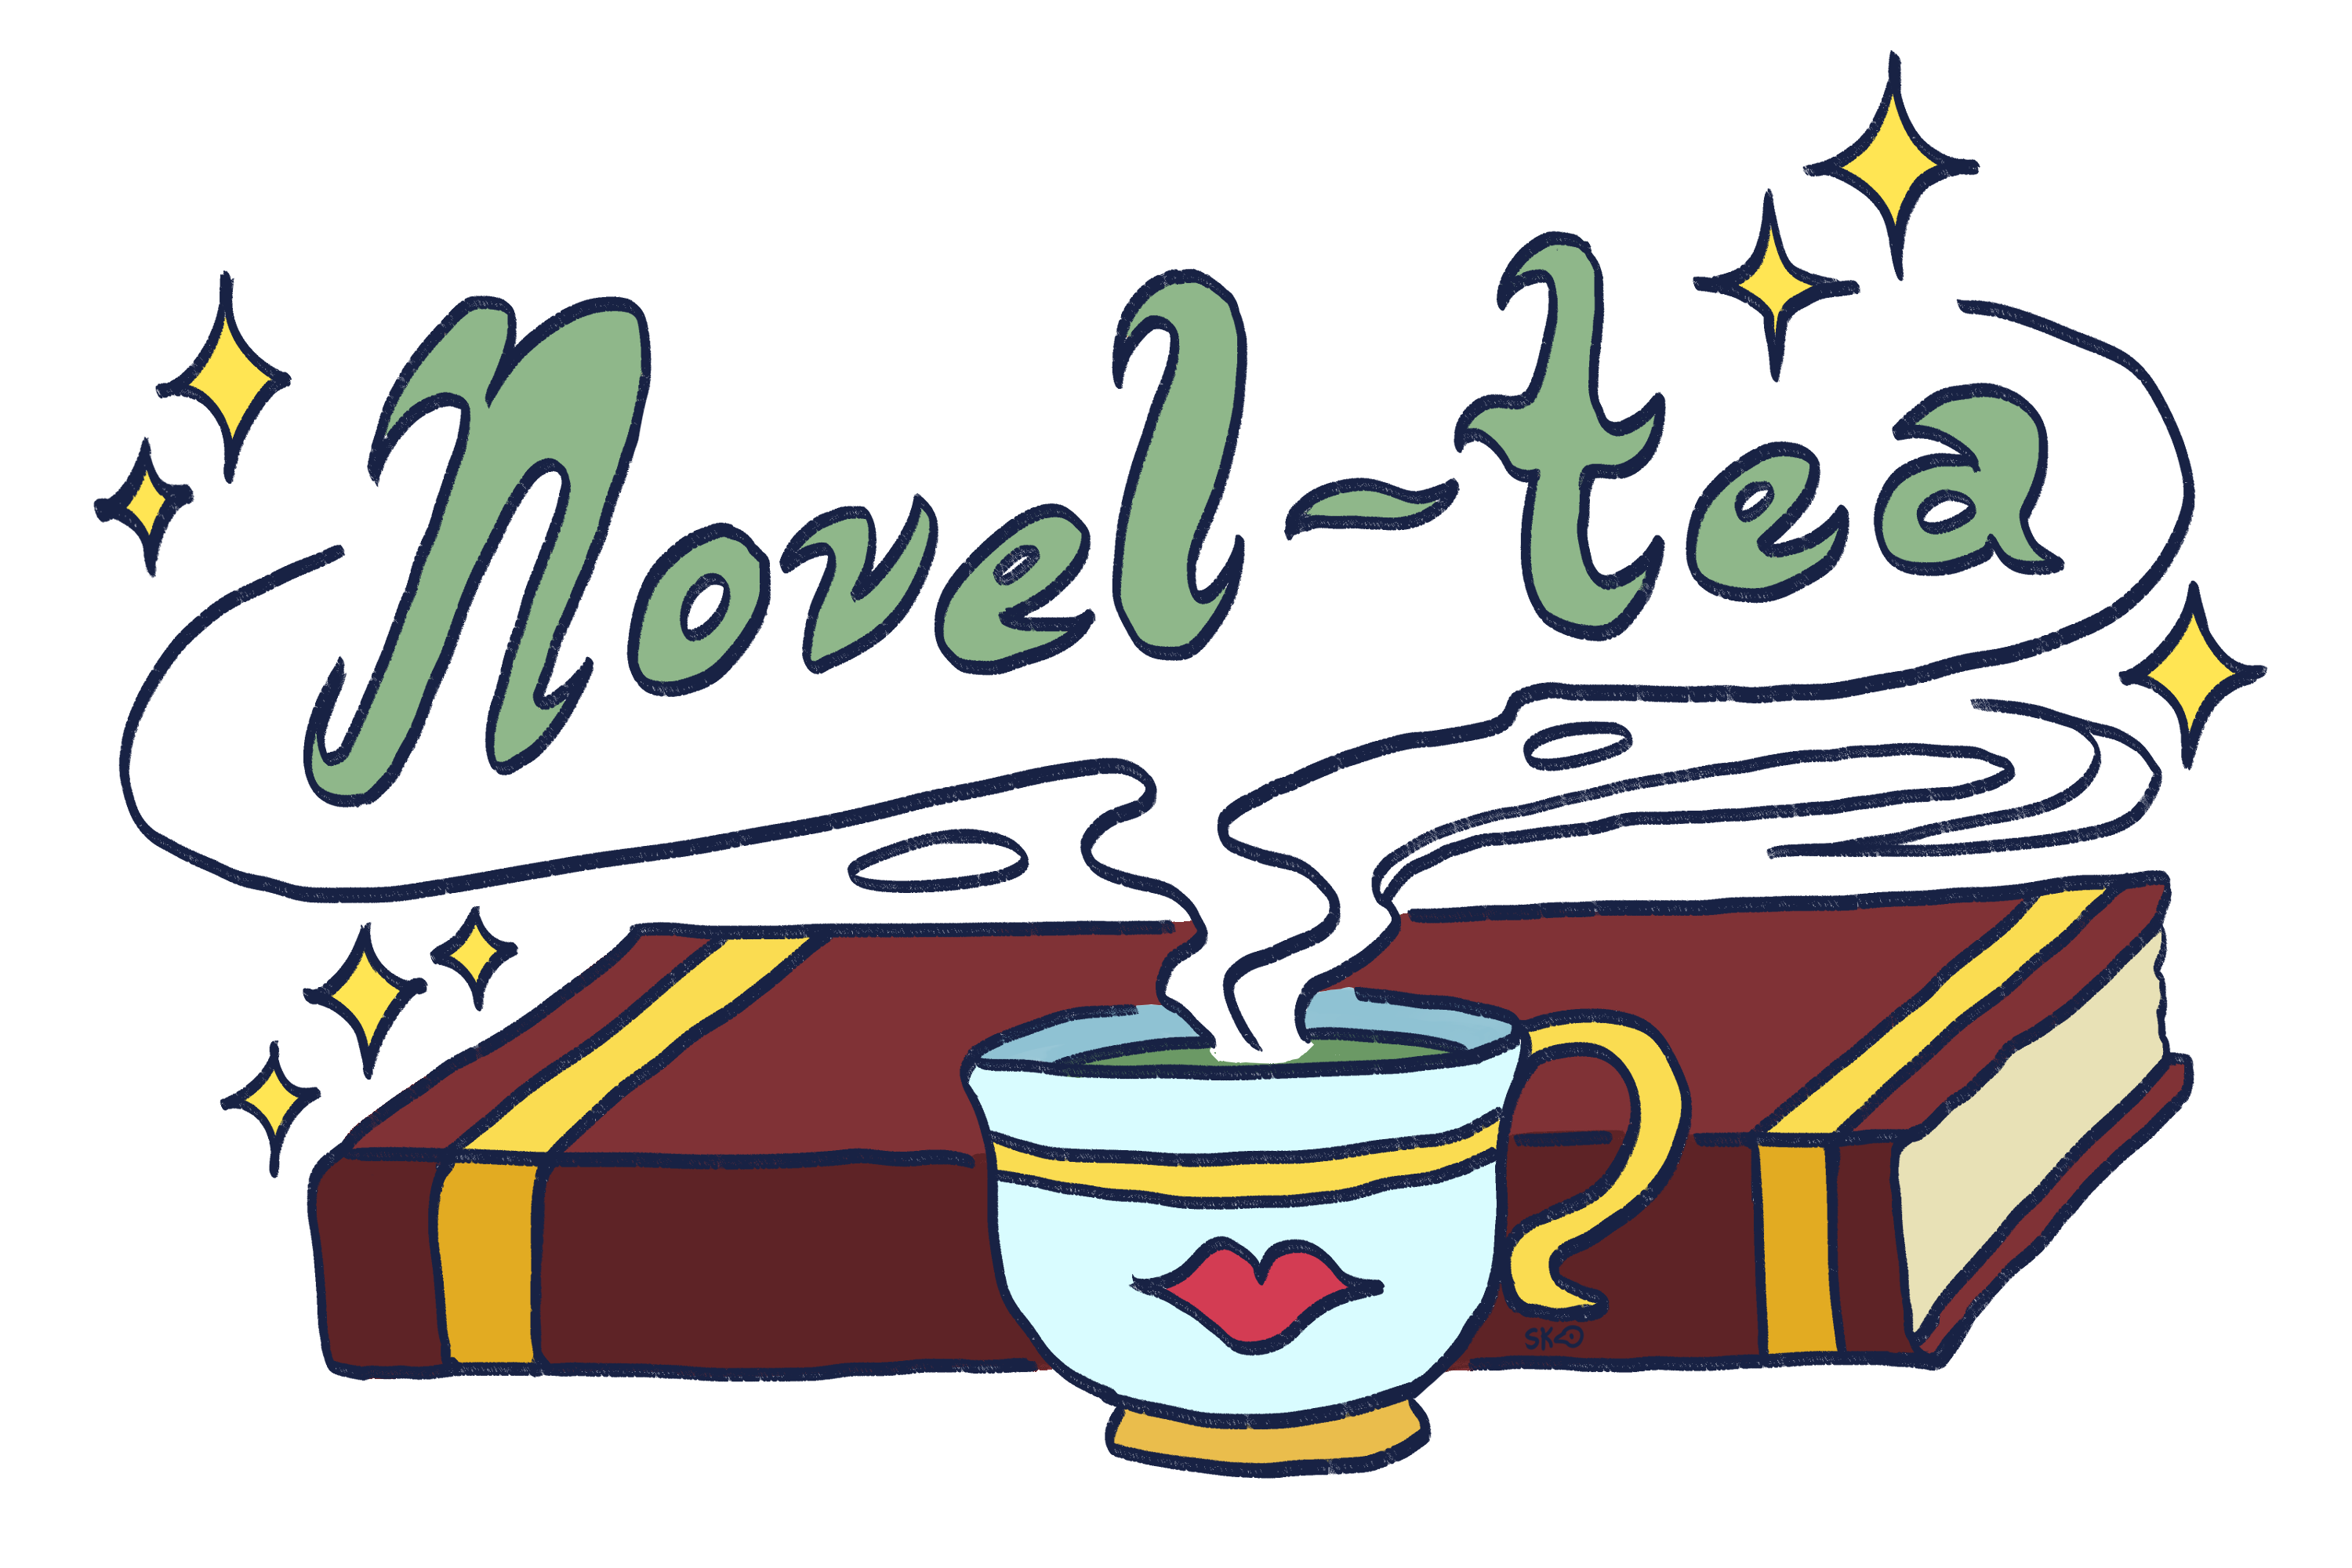 Novel-tea: The book cover is always better!